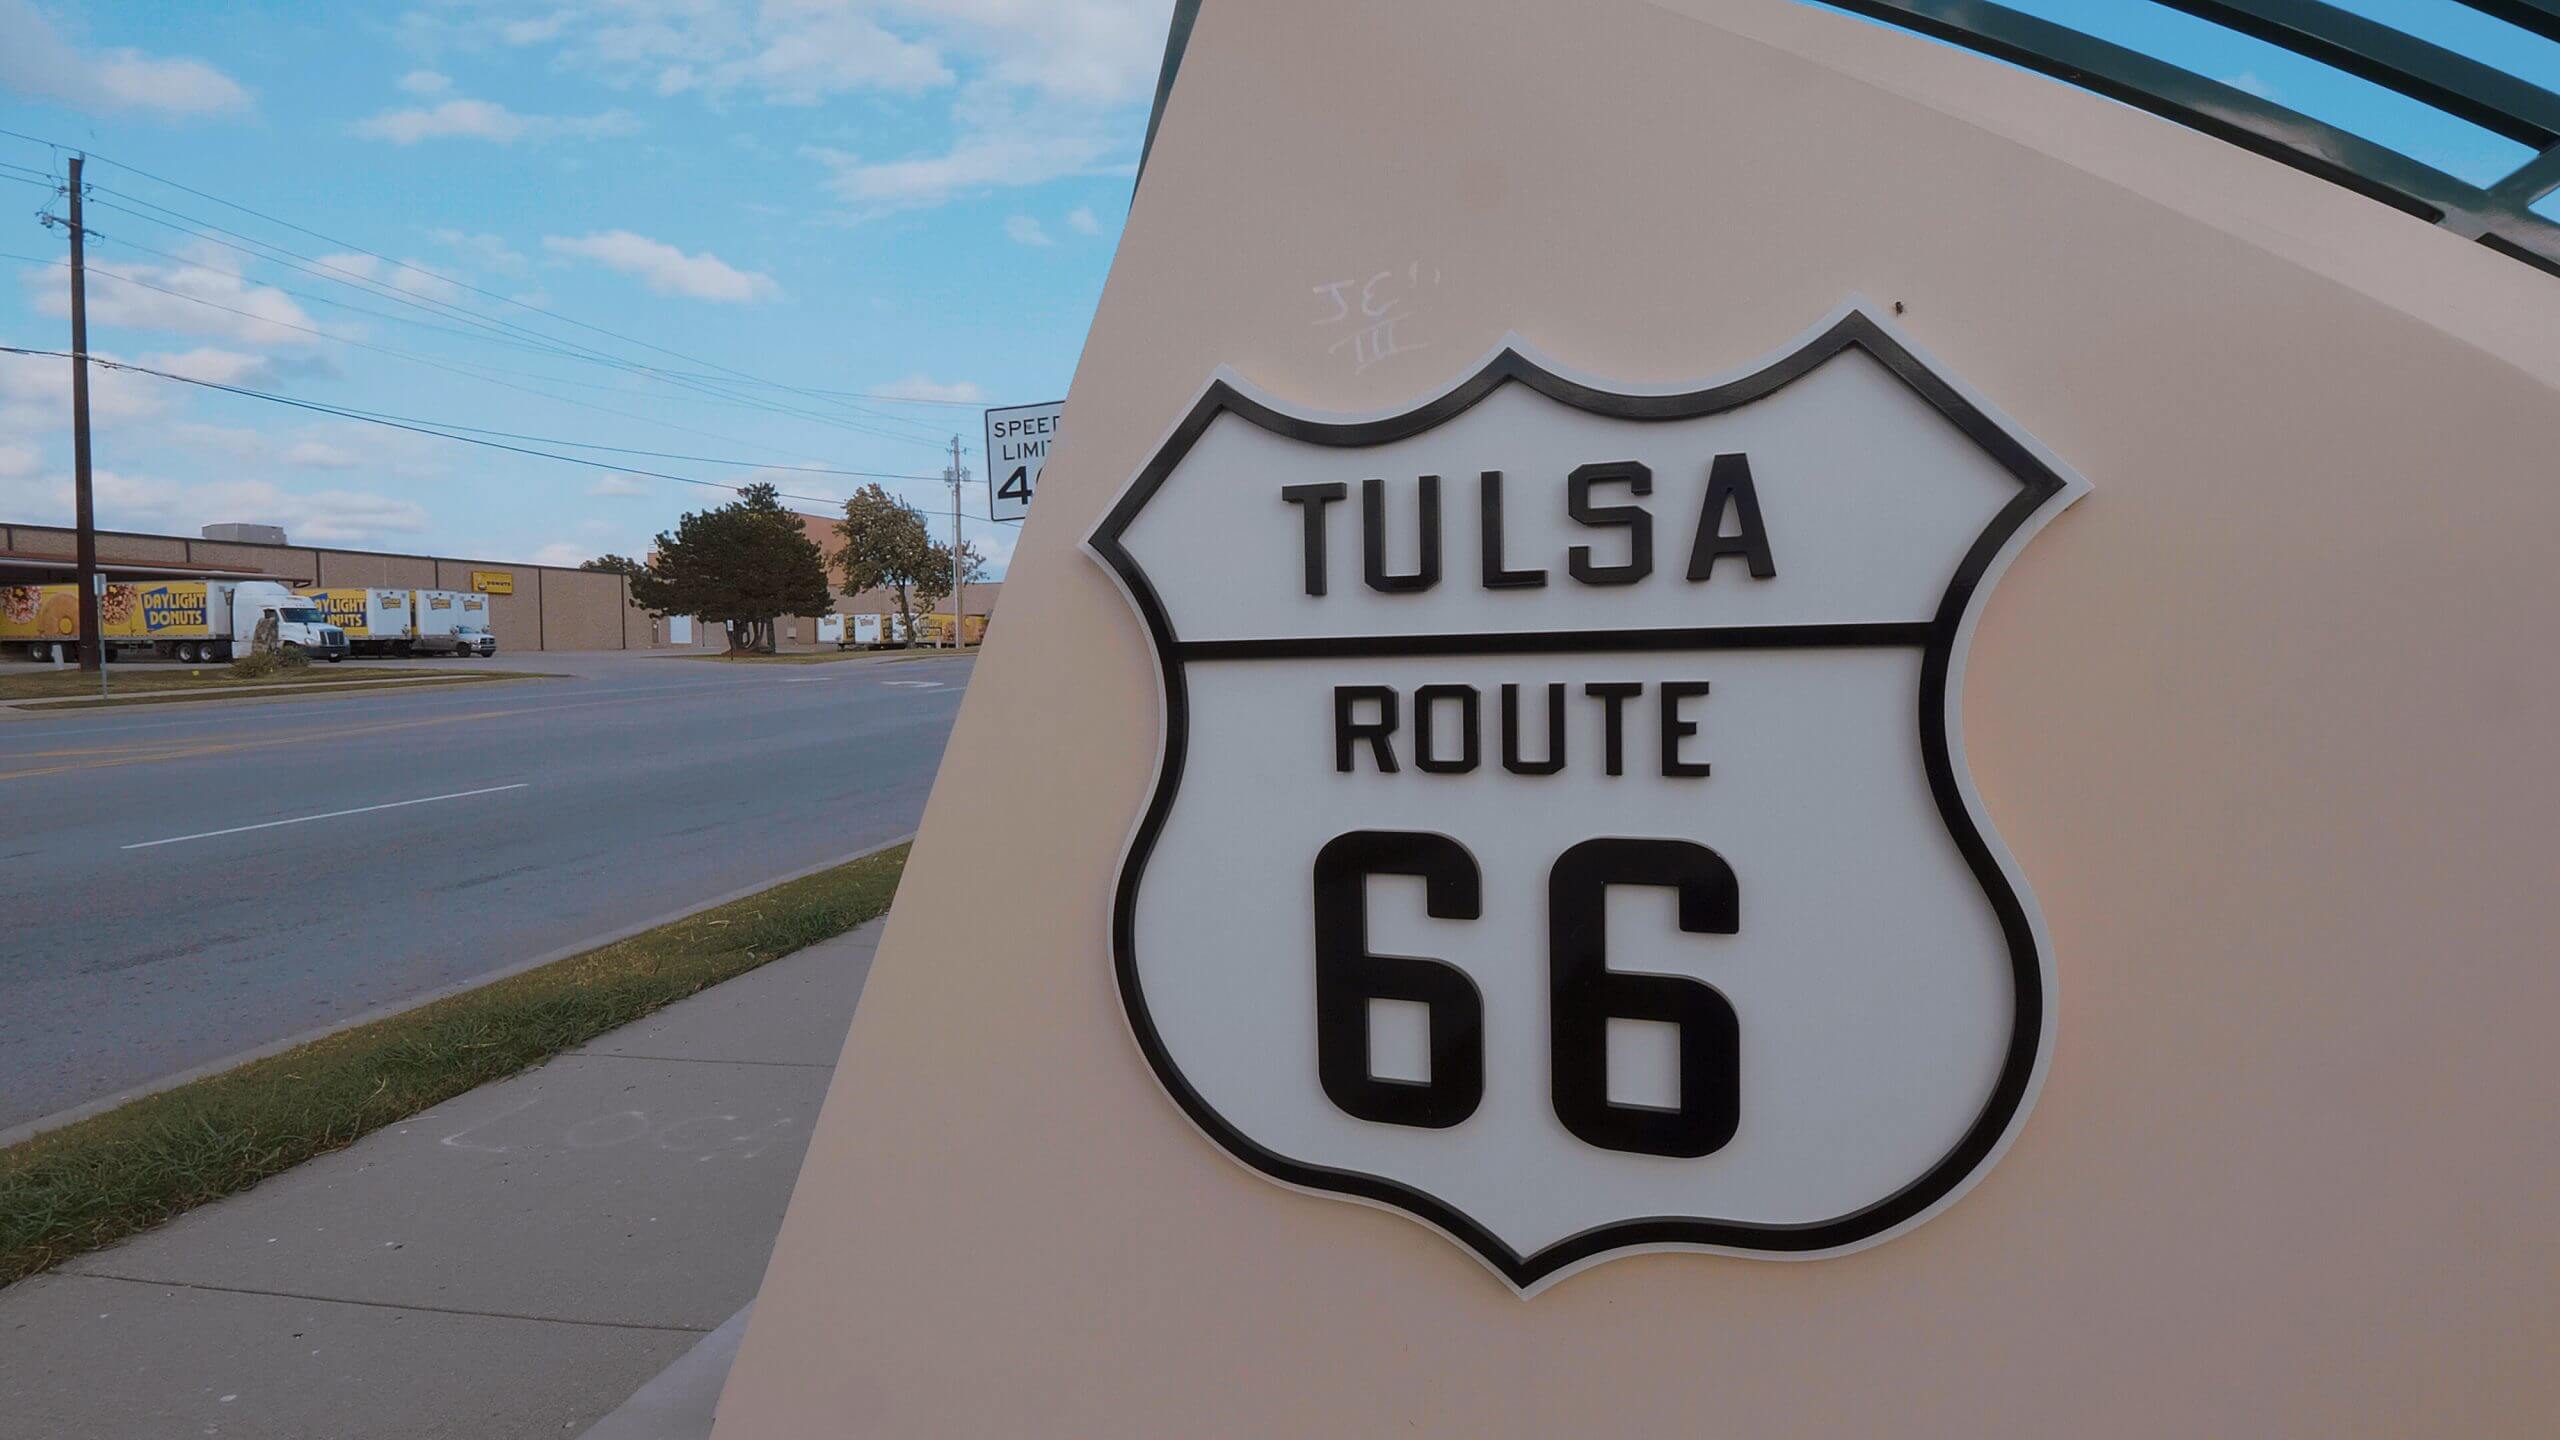 Famous Route 66 sign in Tulsa Oklahoma - USA 2017